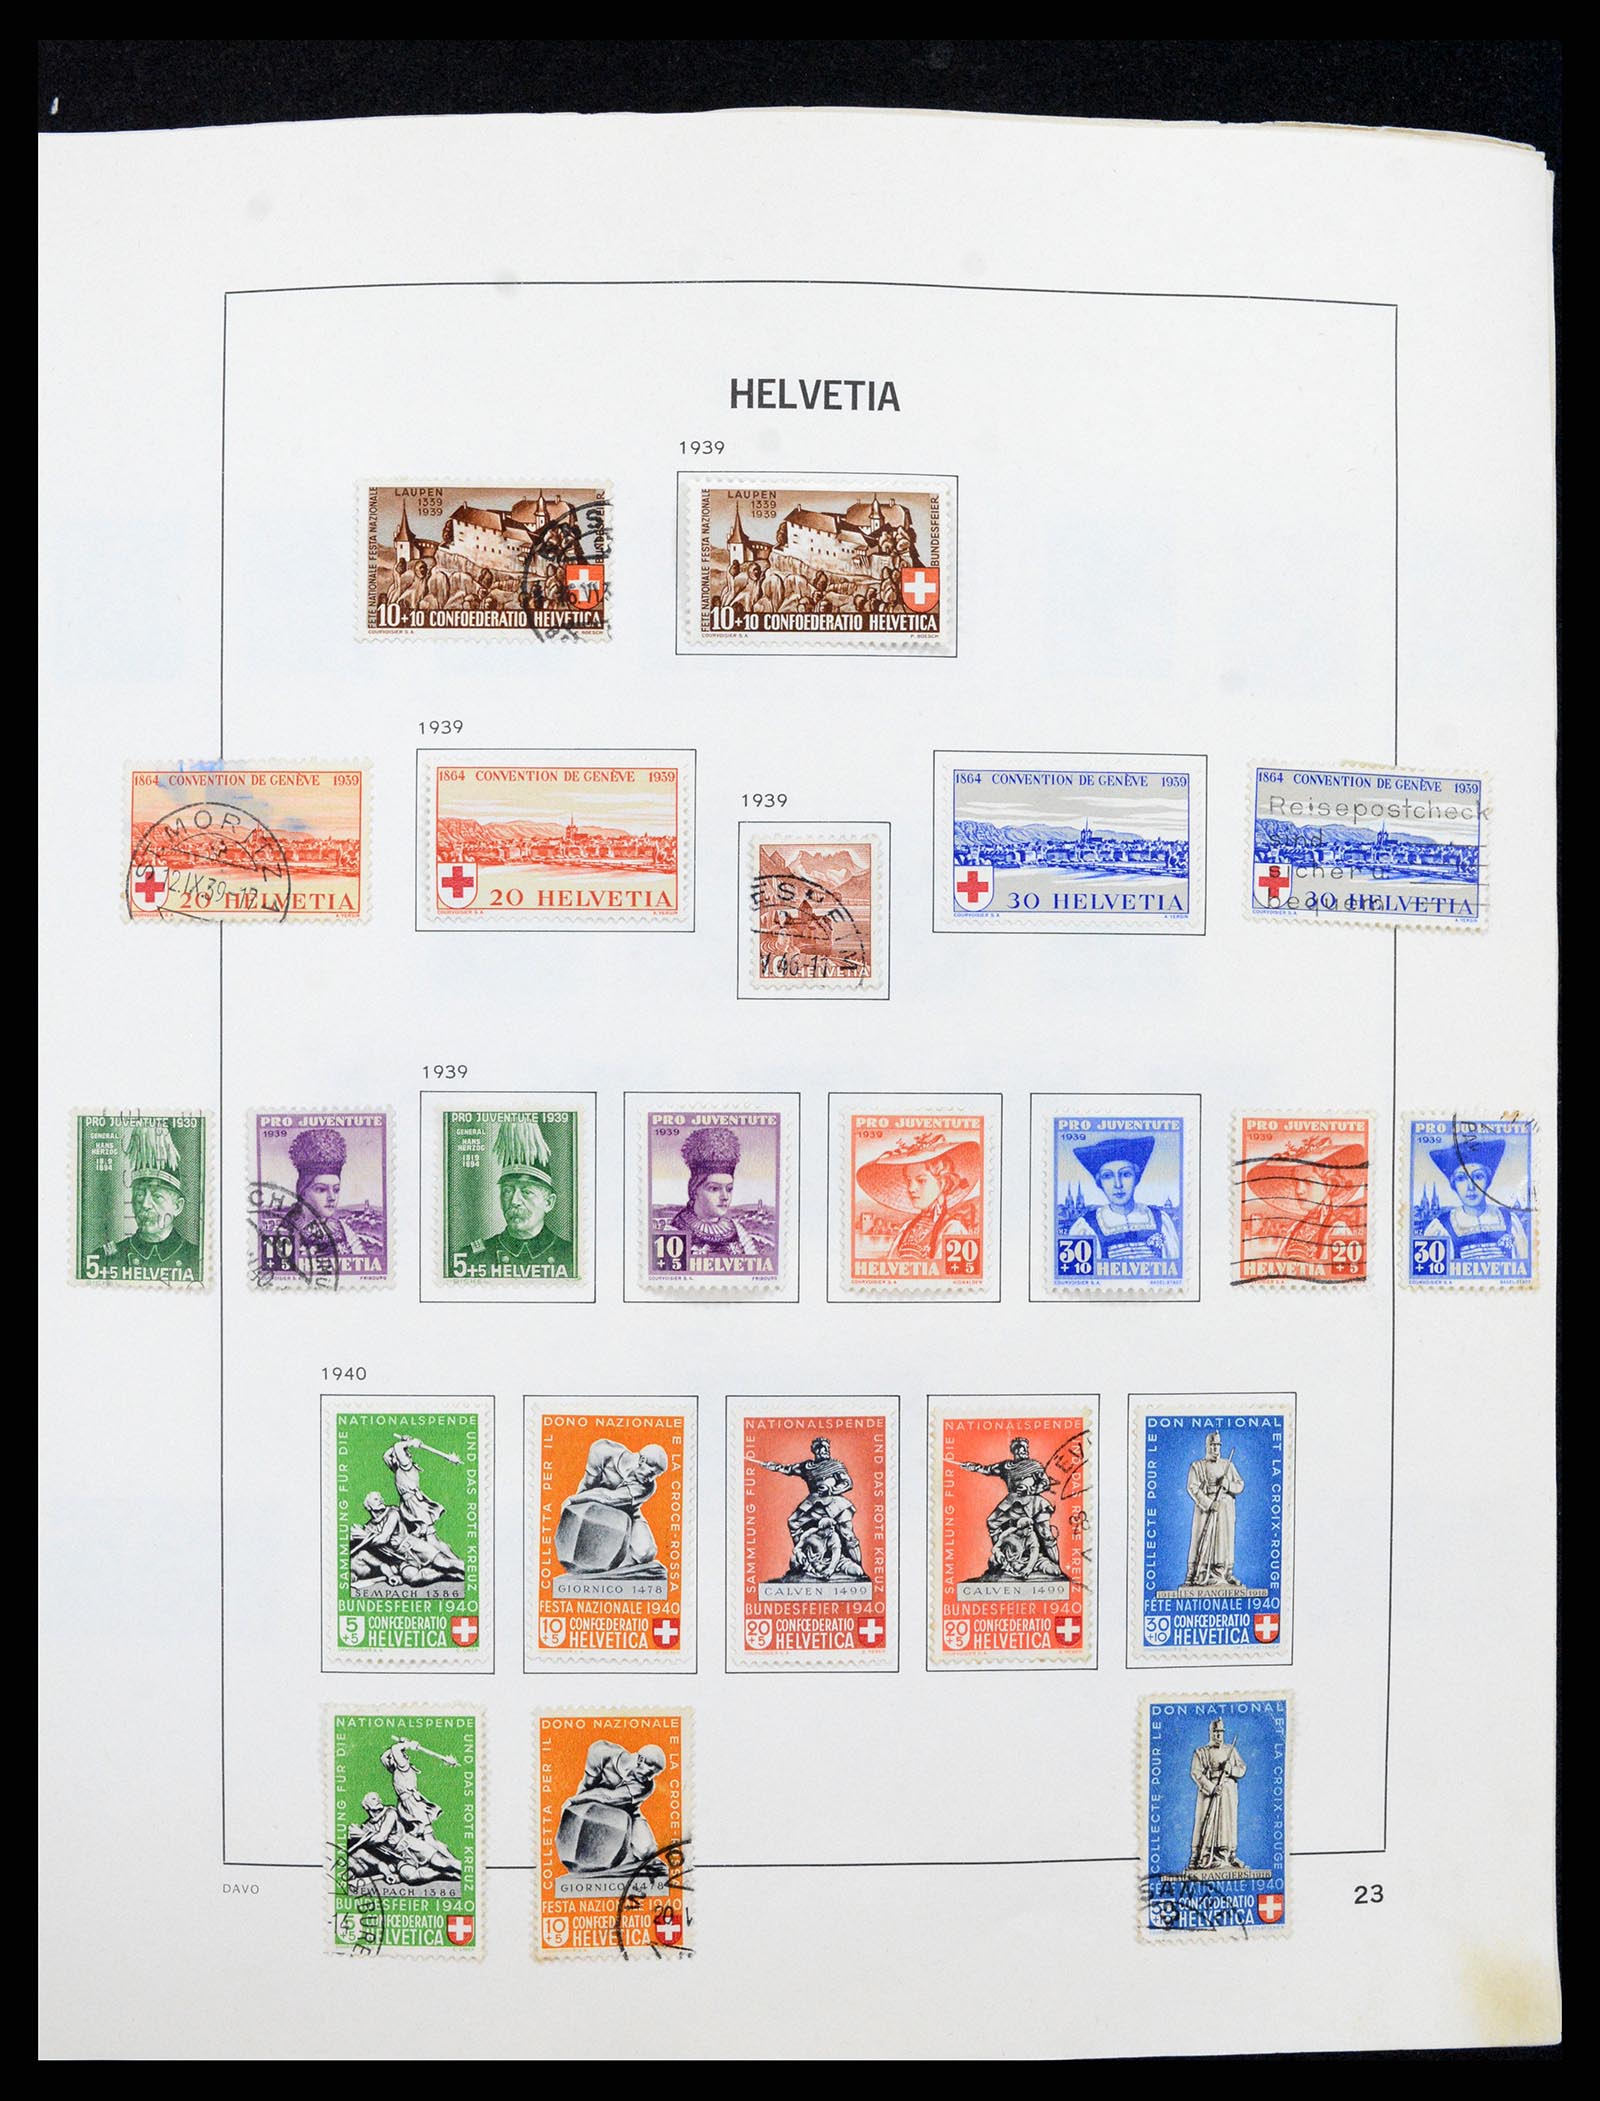 37496 022 - Stamp collection 37496 Switzerland 1854-2002.